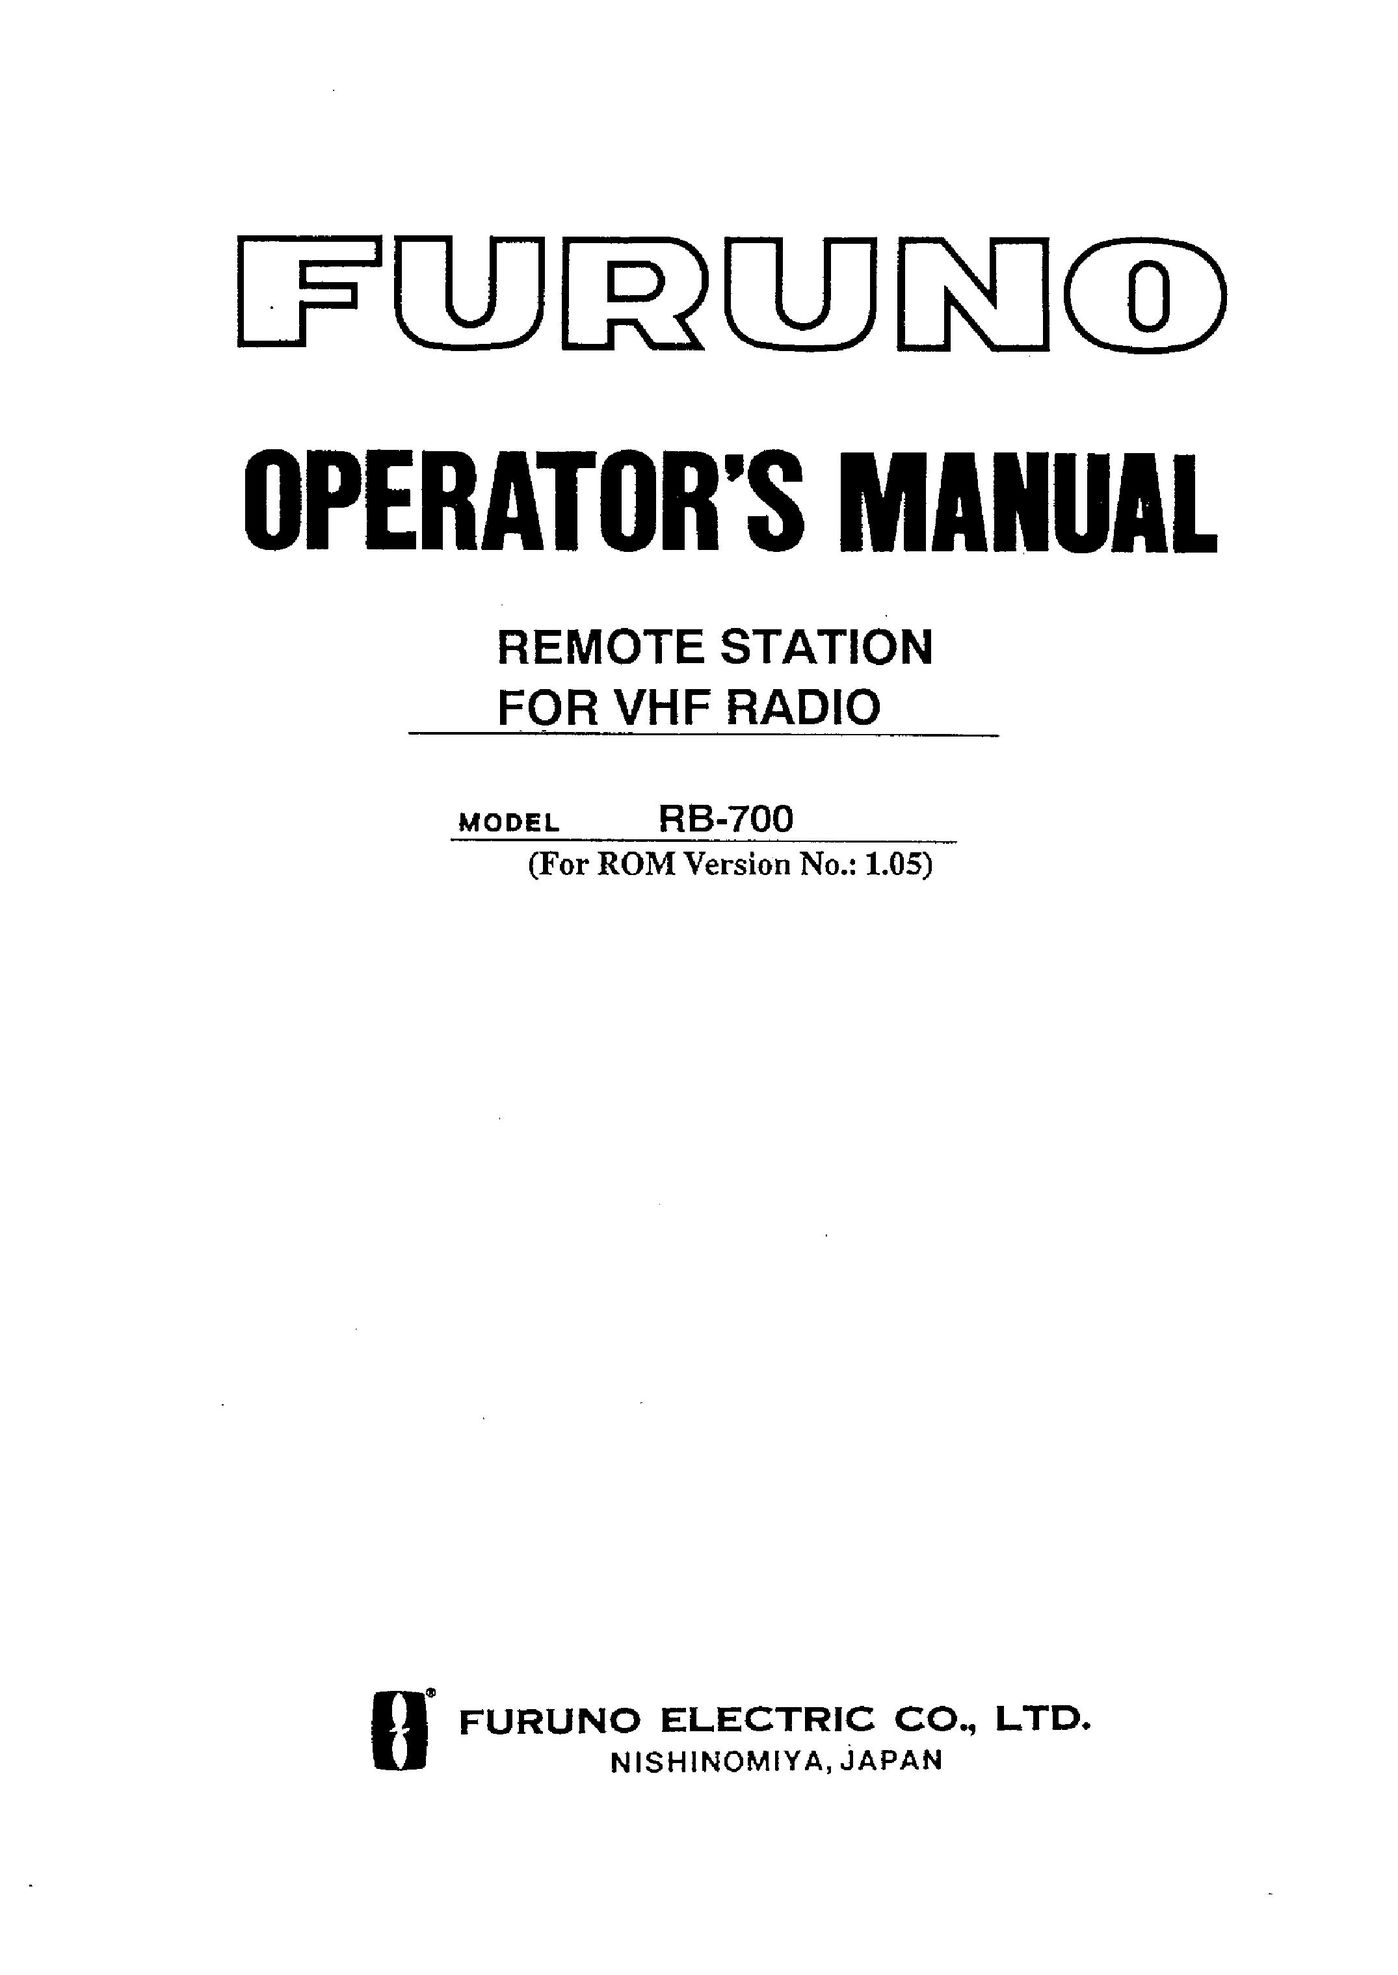 Furuno RB-700 Fax Machine User Manual